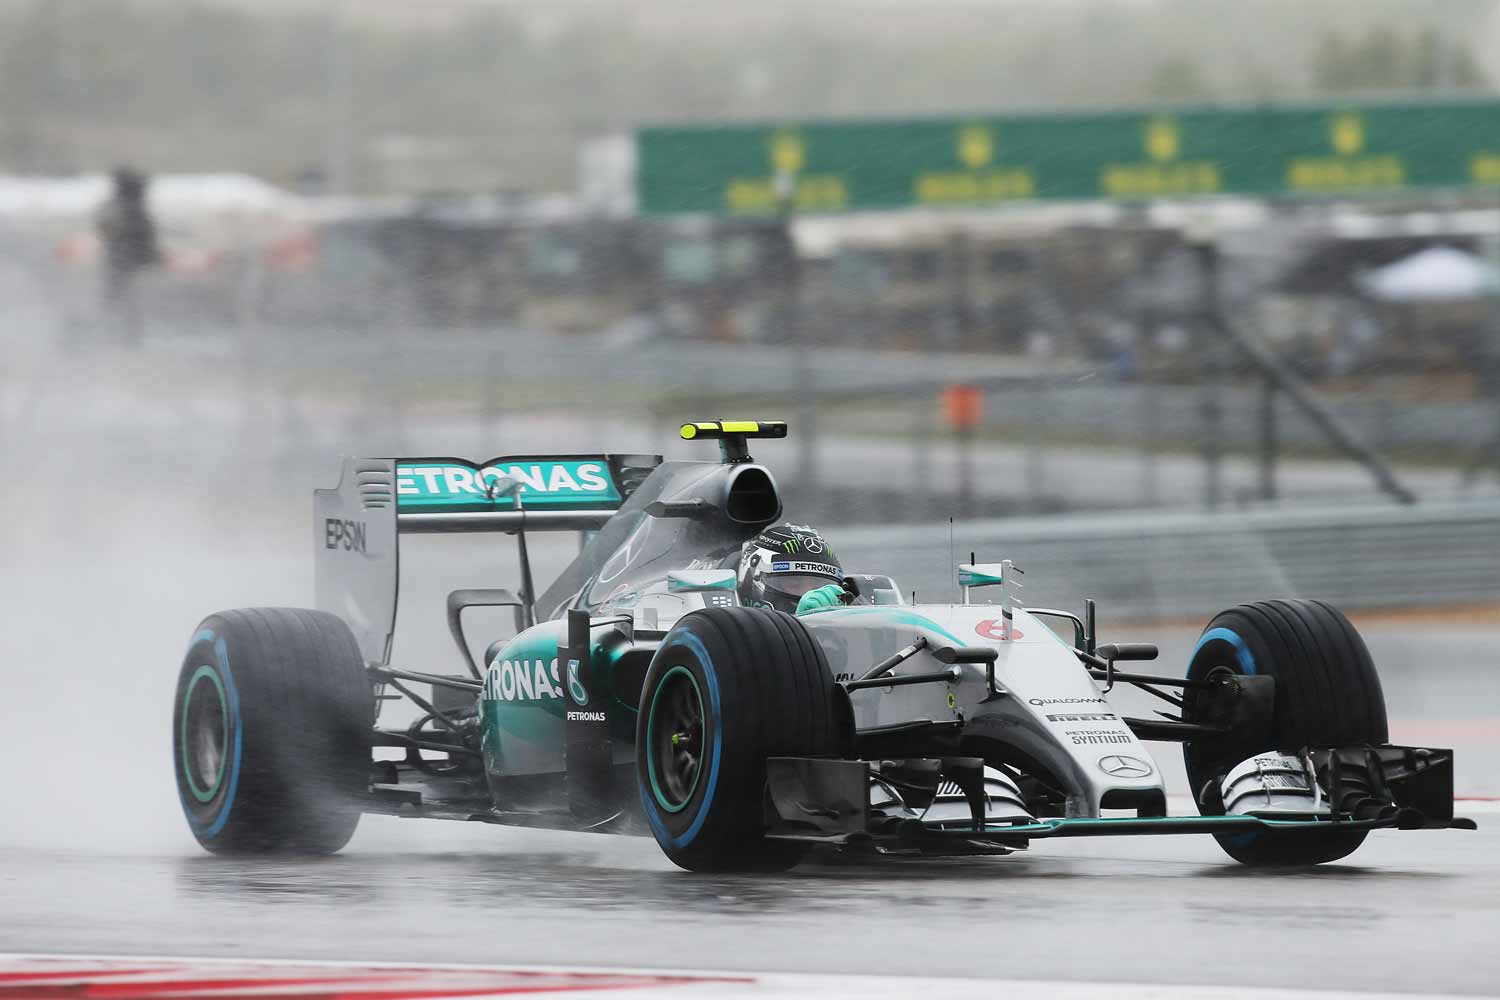 F1-GP-USA2015_Rosberg-on-track